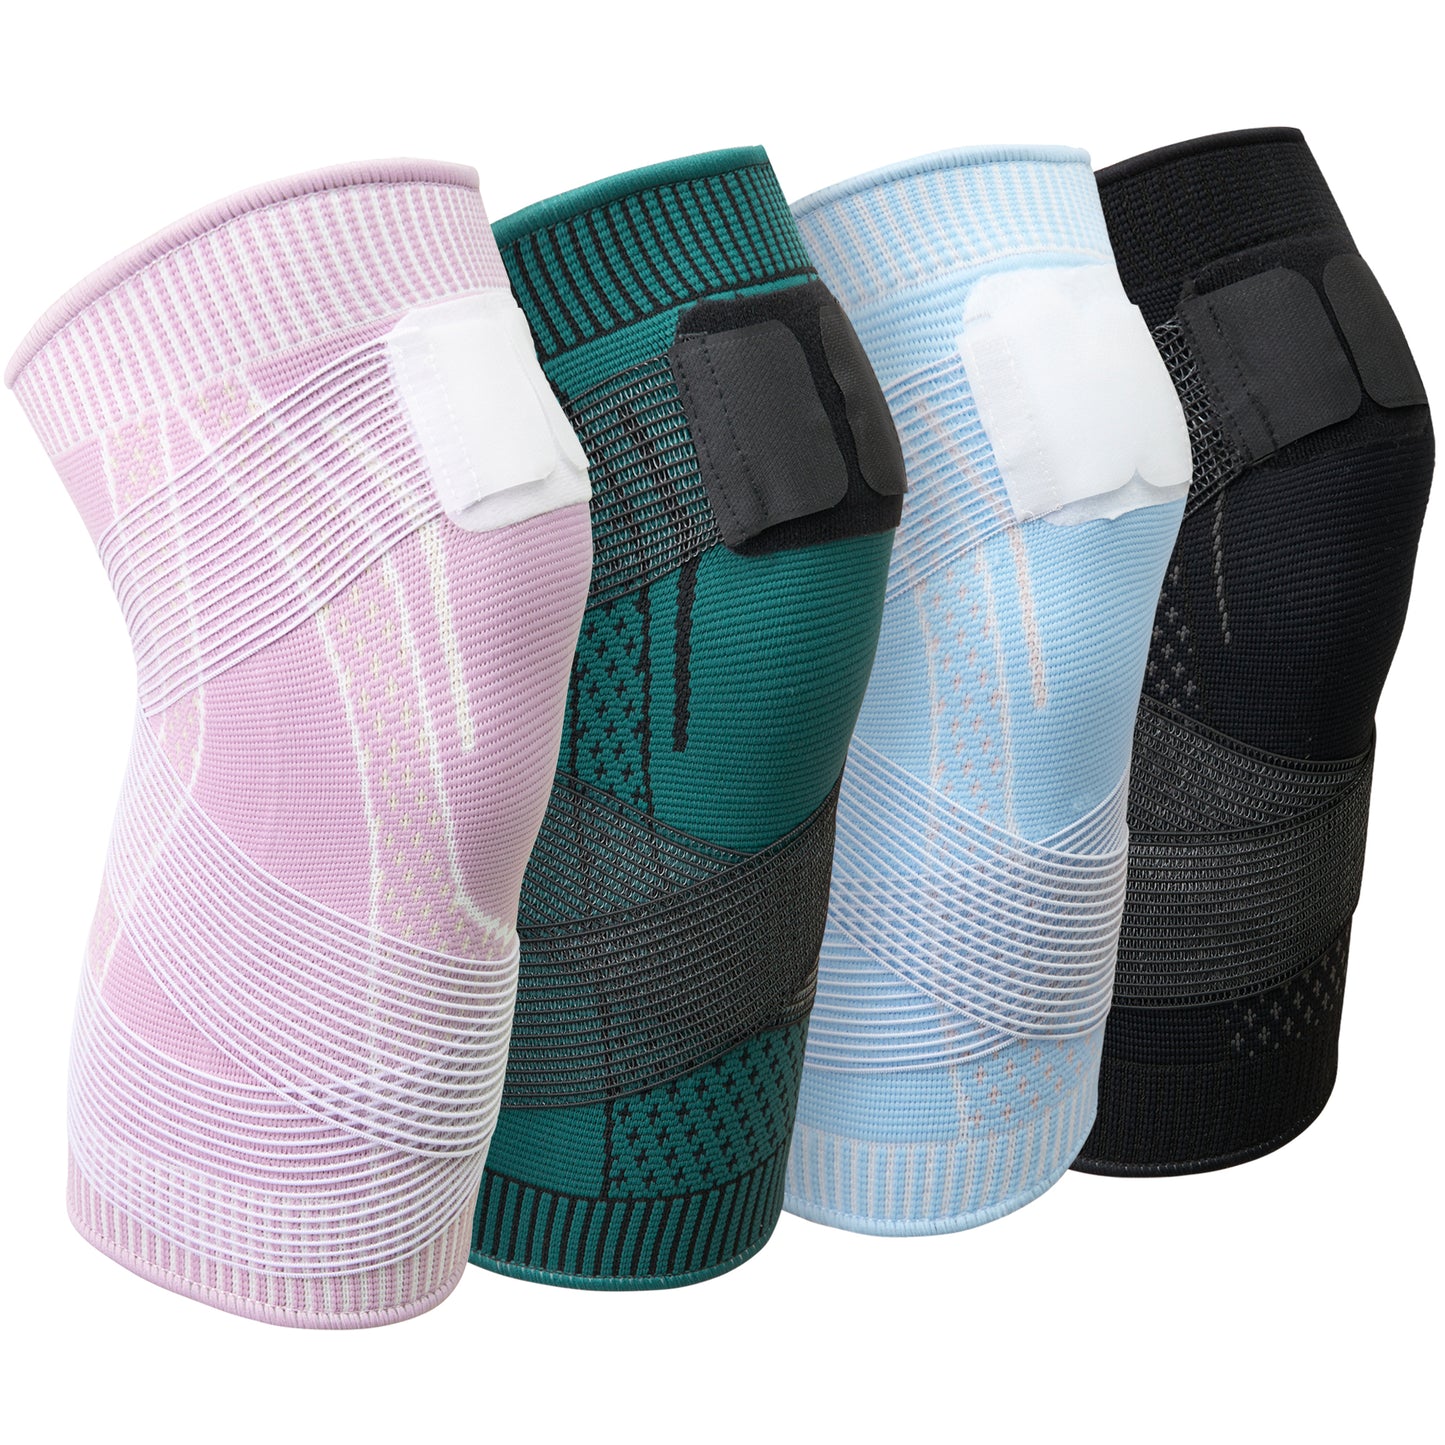 Knee Brace - Compression Sleeve with Knee Wrap